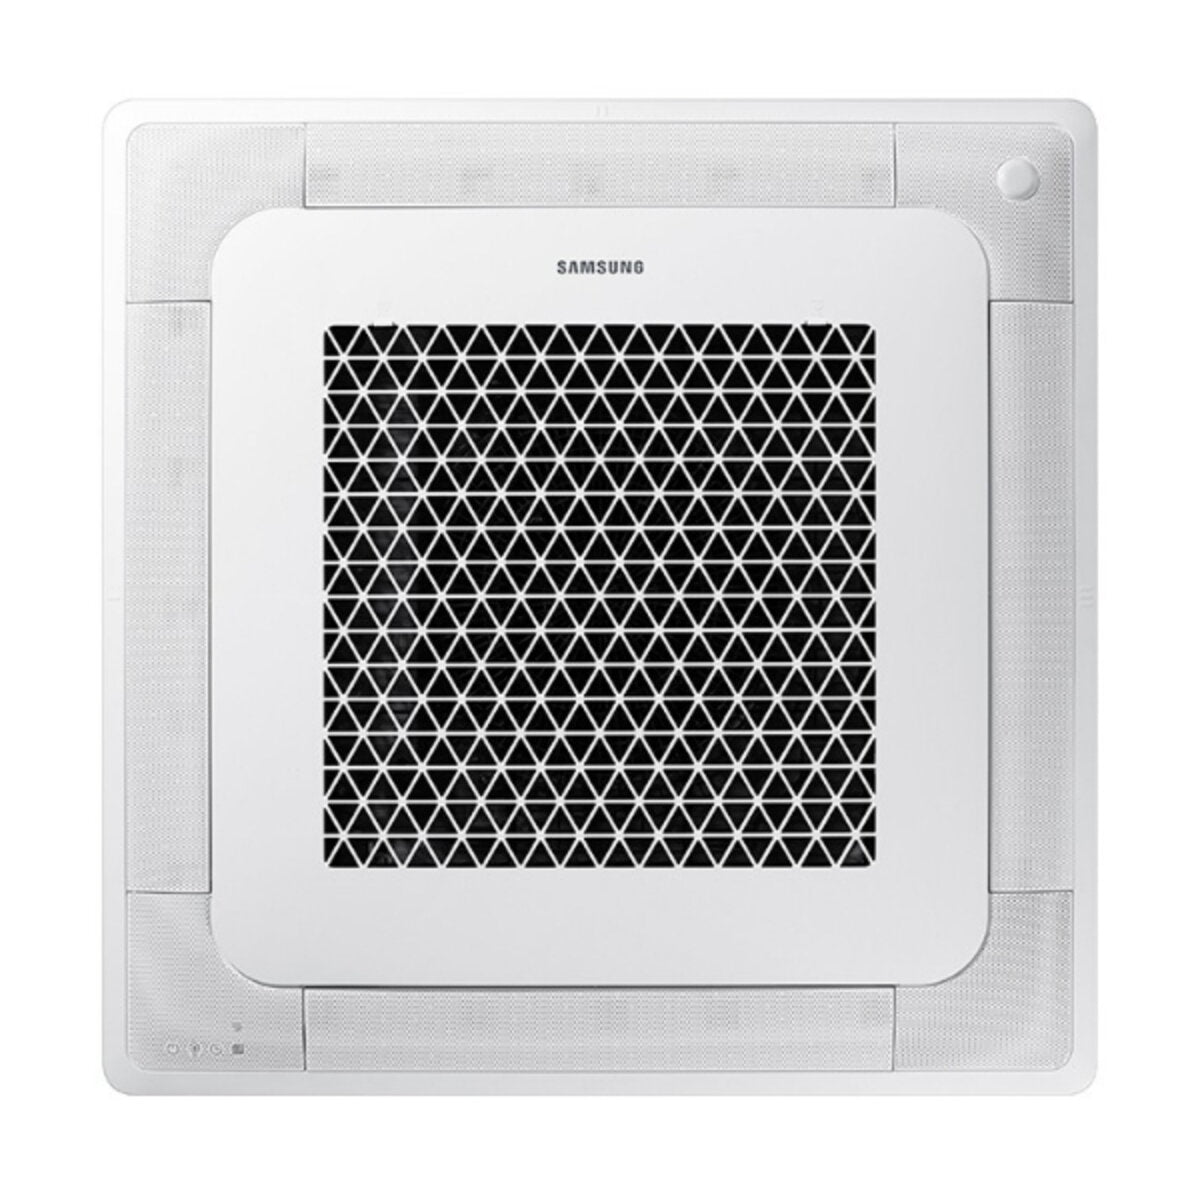 Samsung Air conditioner Windfree 4-way square split 9000 + 12000 + 12000 + 12000 BTU inverter A ++ outdoor unit 10.0 kW